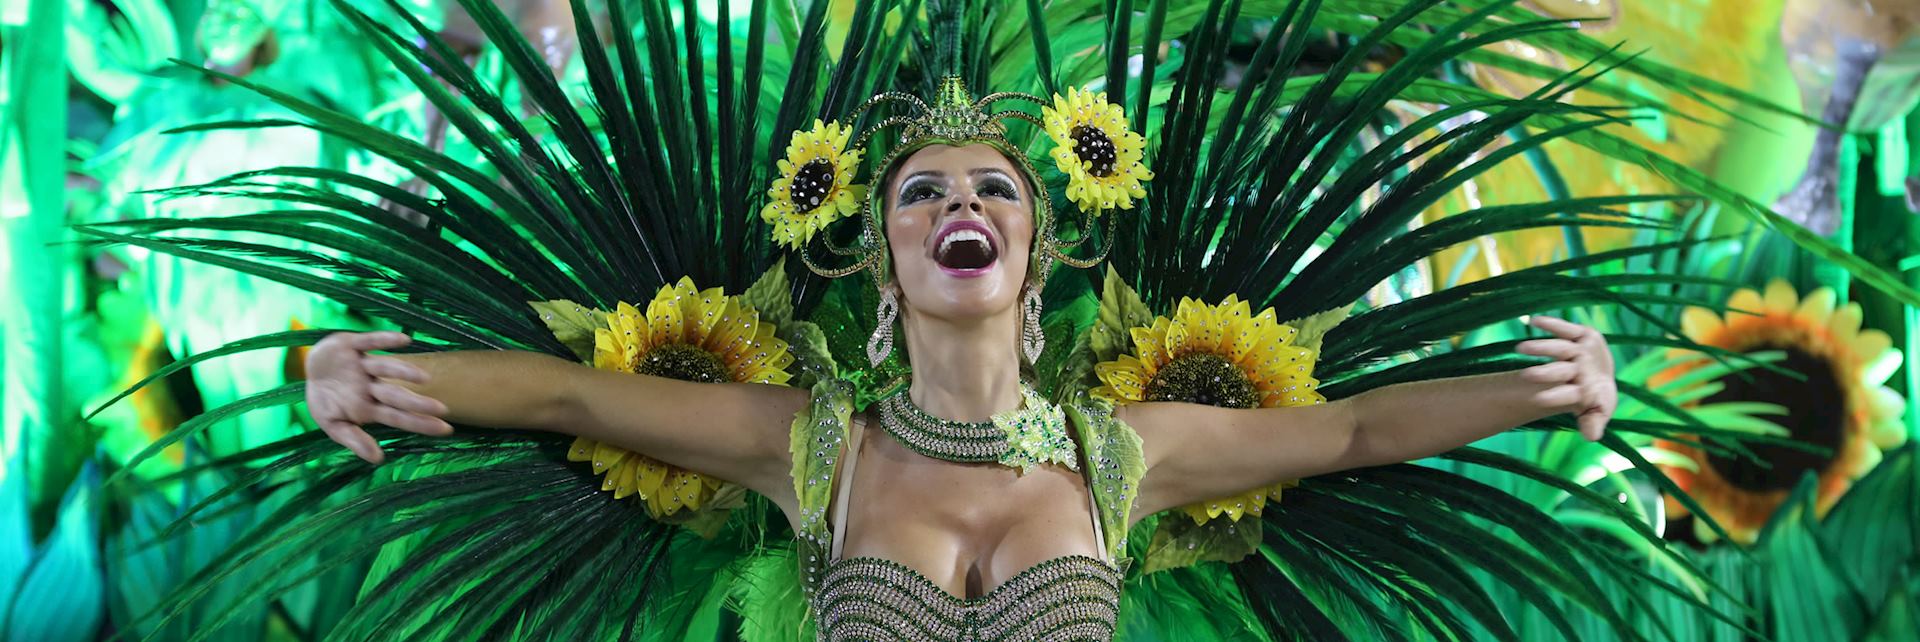 The Rio Carnival - Winners' Parade